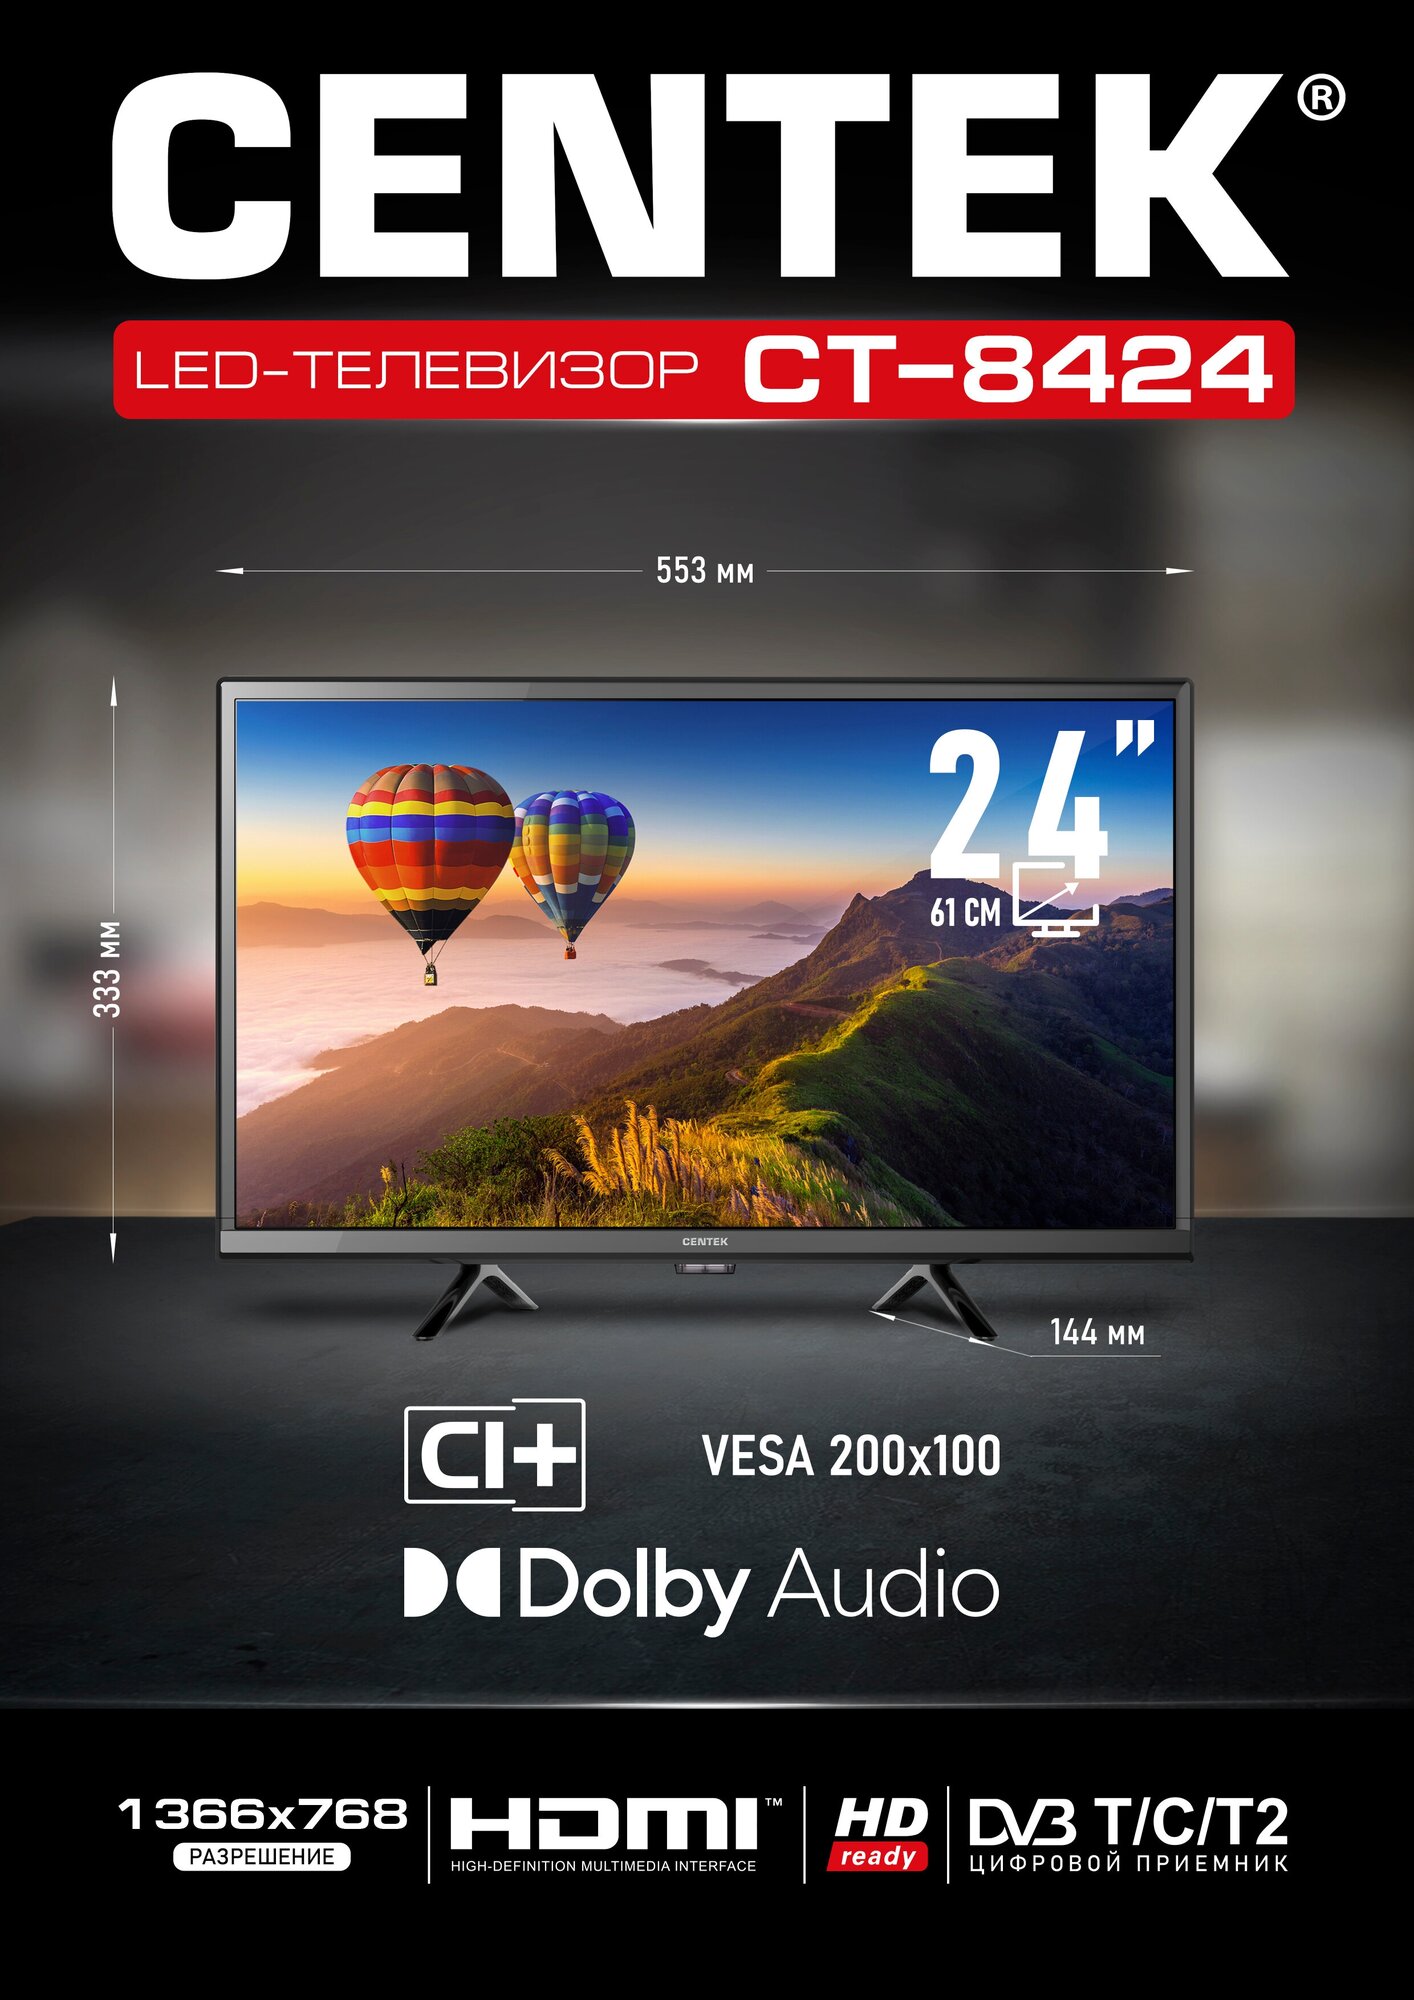 Телевизор CENTEK CT-8424 черный 24_LED цифровой тюнер DVB-T  C  T2 CI+ HDMIx2 (1arc) DOLBY HD Ready 61 см